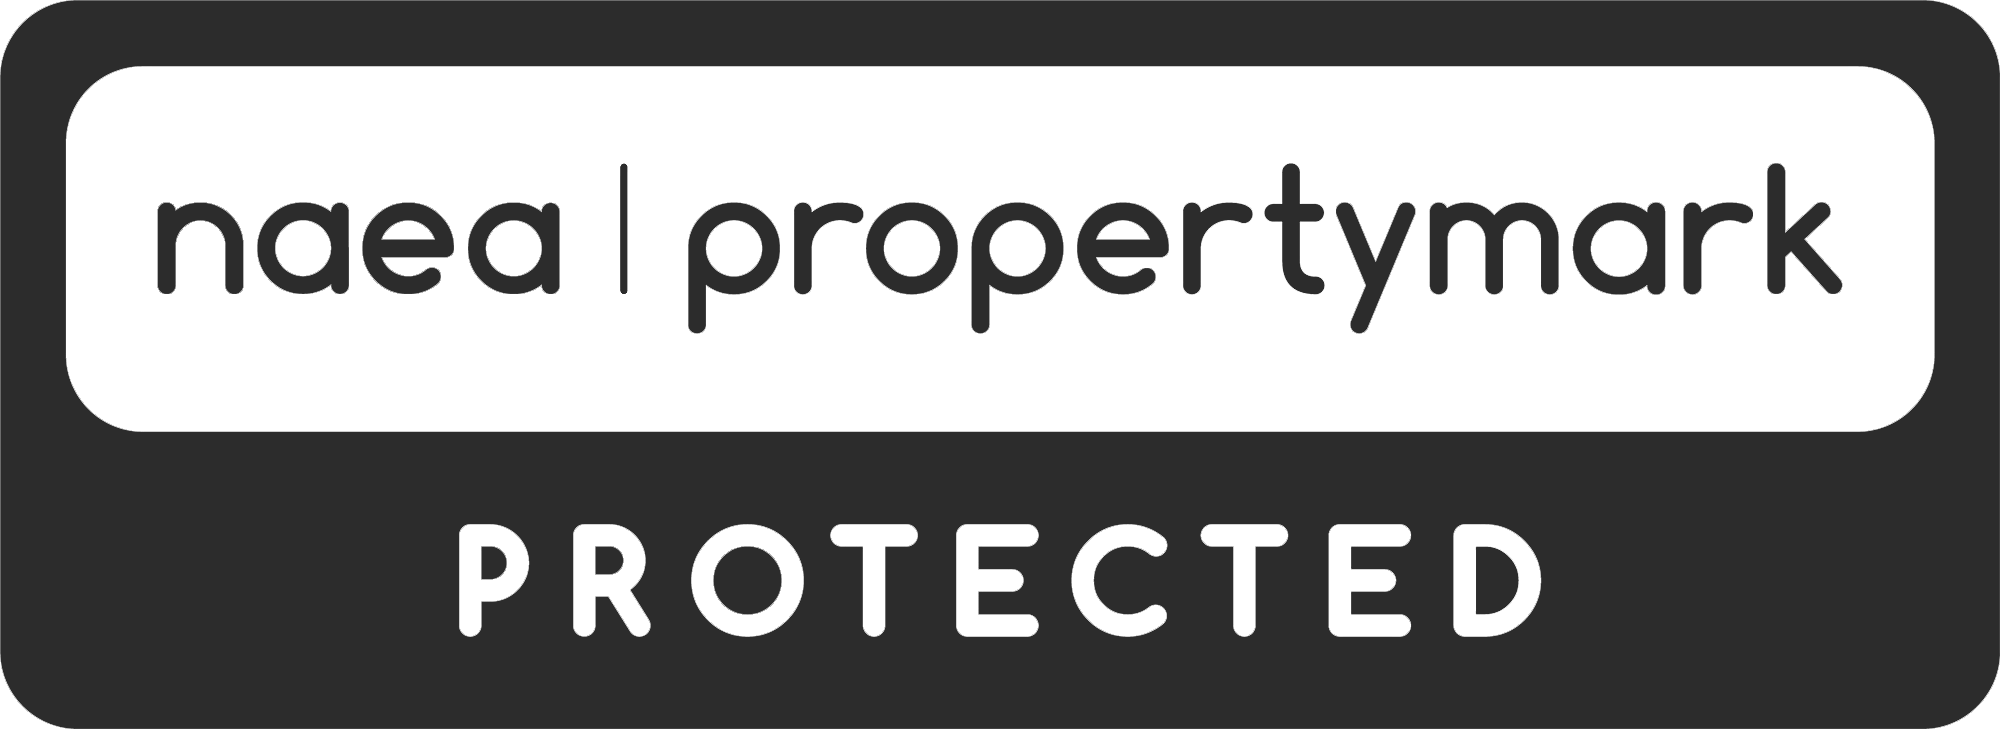 NAEA Propertymark Protected-grey.png